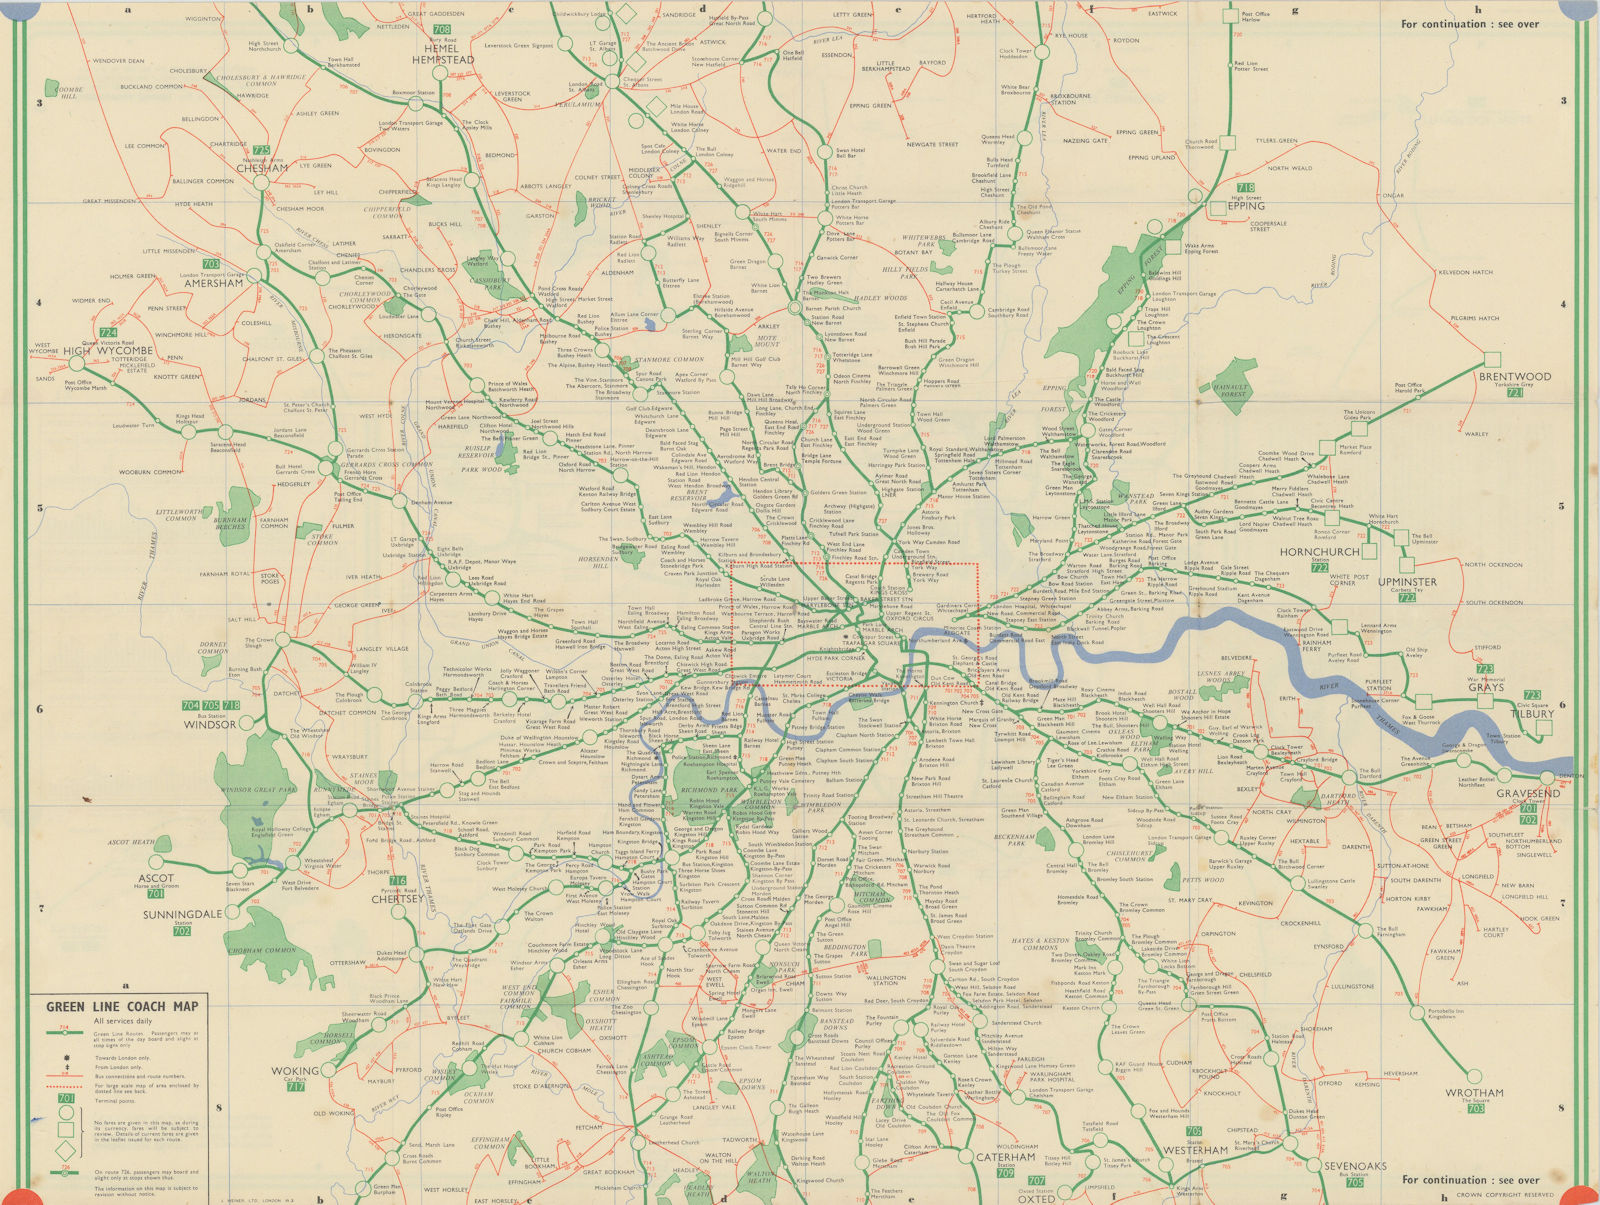 London Transport Green Line Coach map. #1 1947 old vintage plan chart